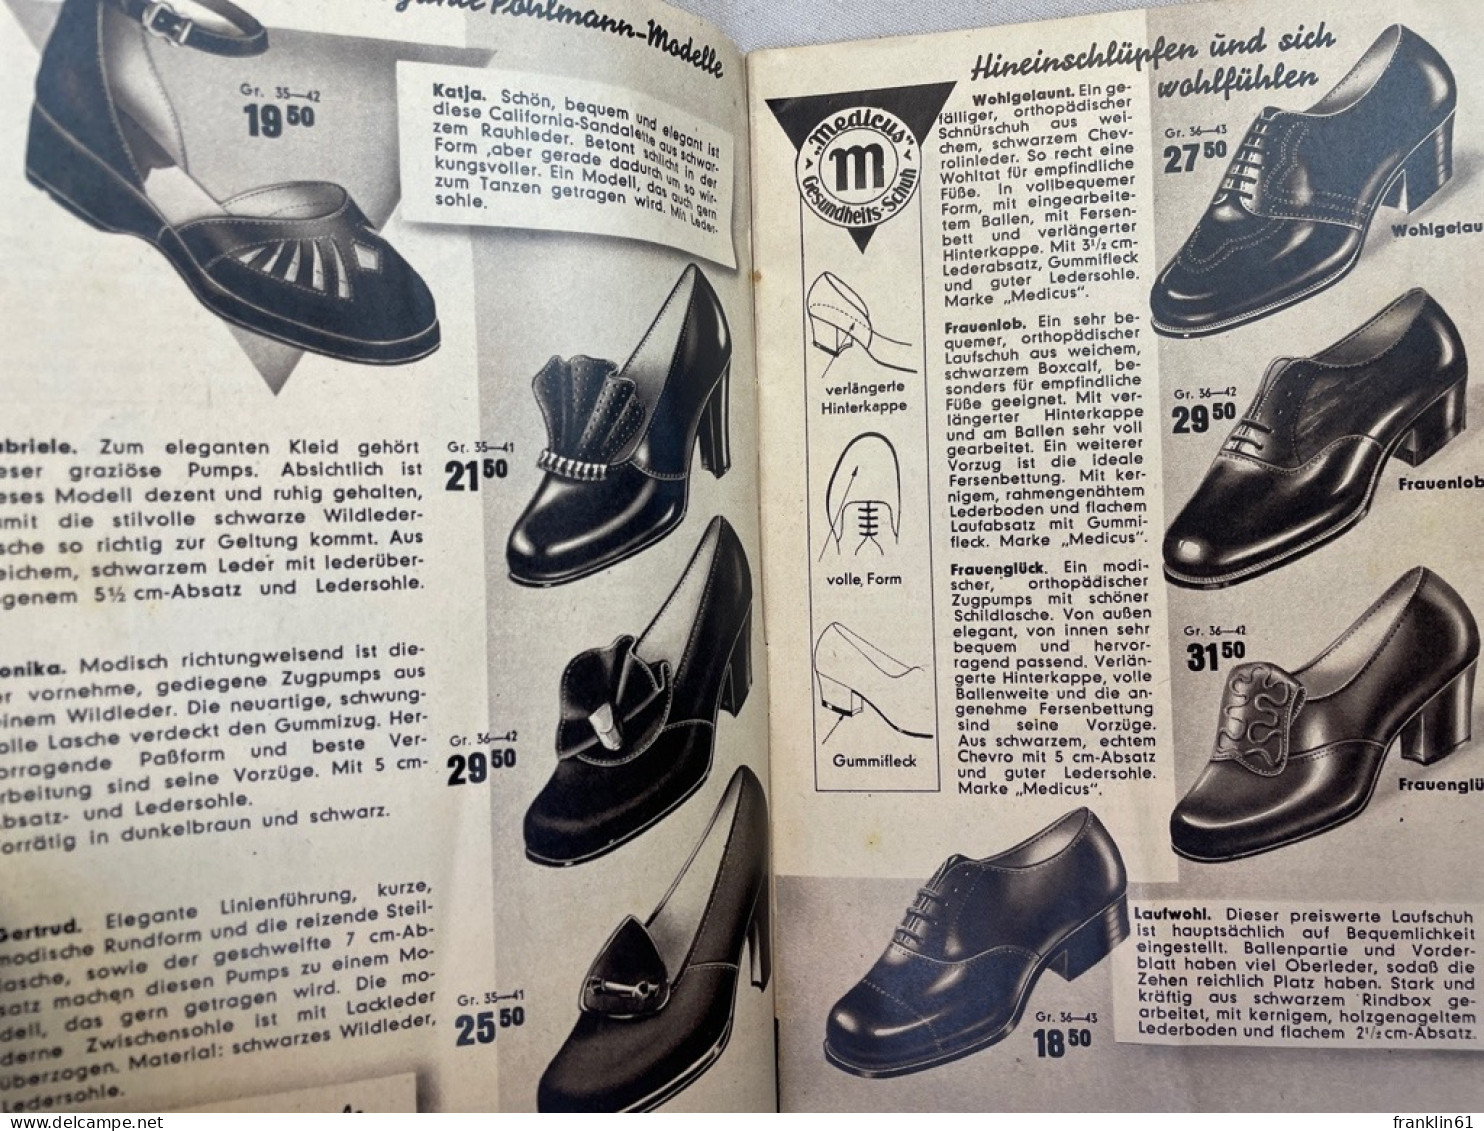 Verkaufskatalog Pöhlmann Schuhe Nürnberg 1950. Ihr Schuhberater. - Autres & Non Classés